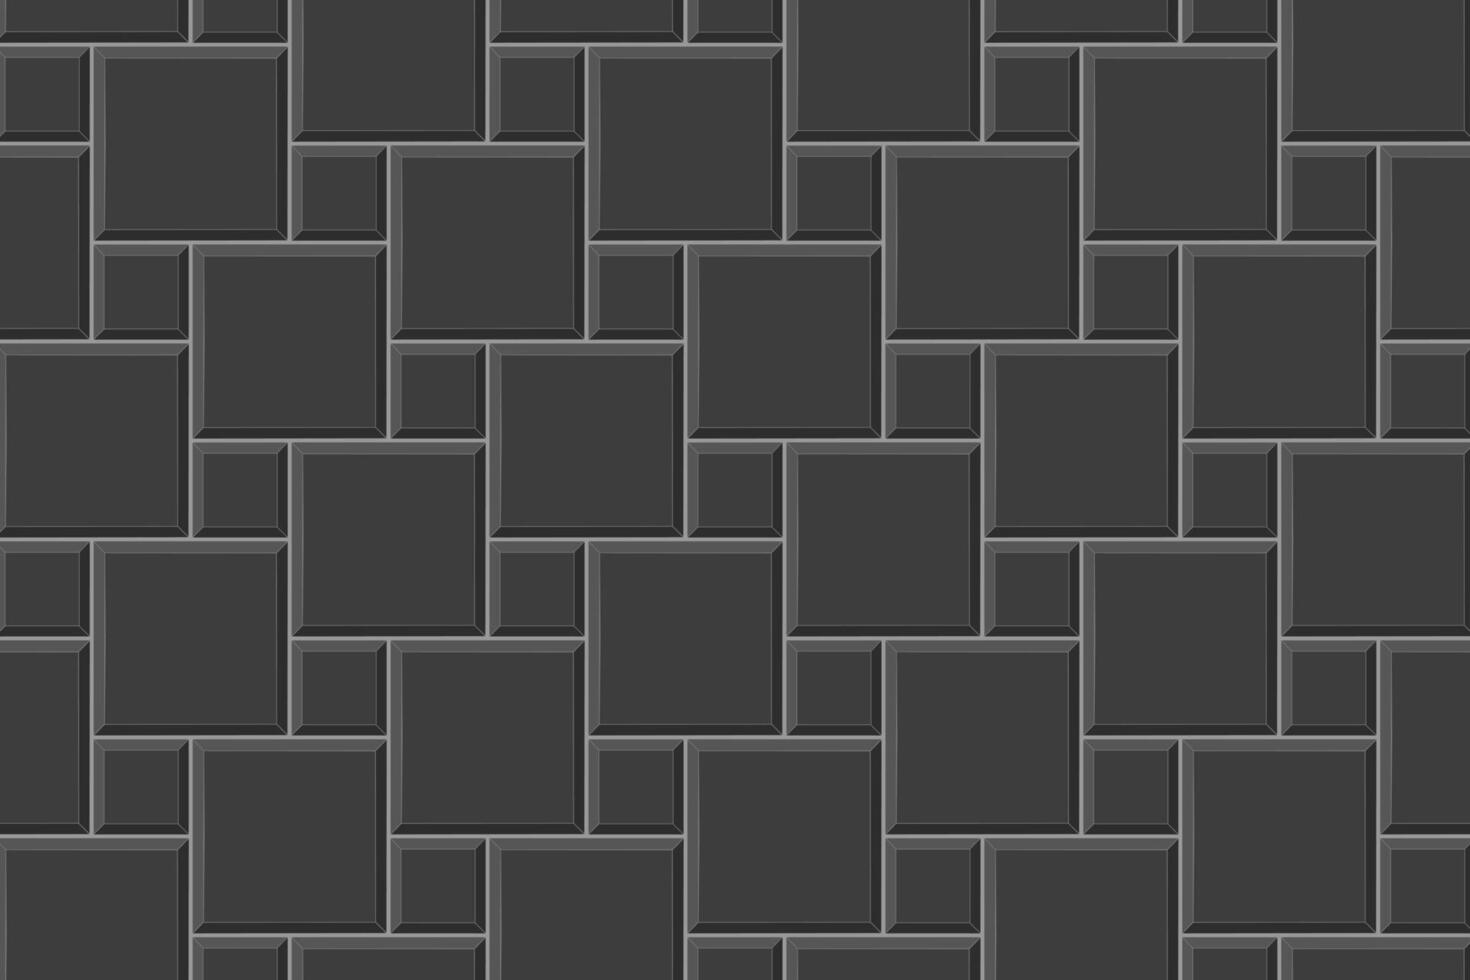 Black hopscotch tile seamless pattern. Stone or ceramic brick wall background. Kitchen backsplash mosaic texture. Bathroom, shower or toilet floor. Pavement texture vector